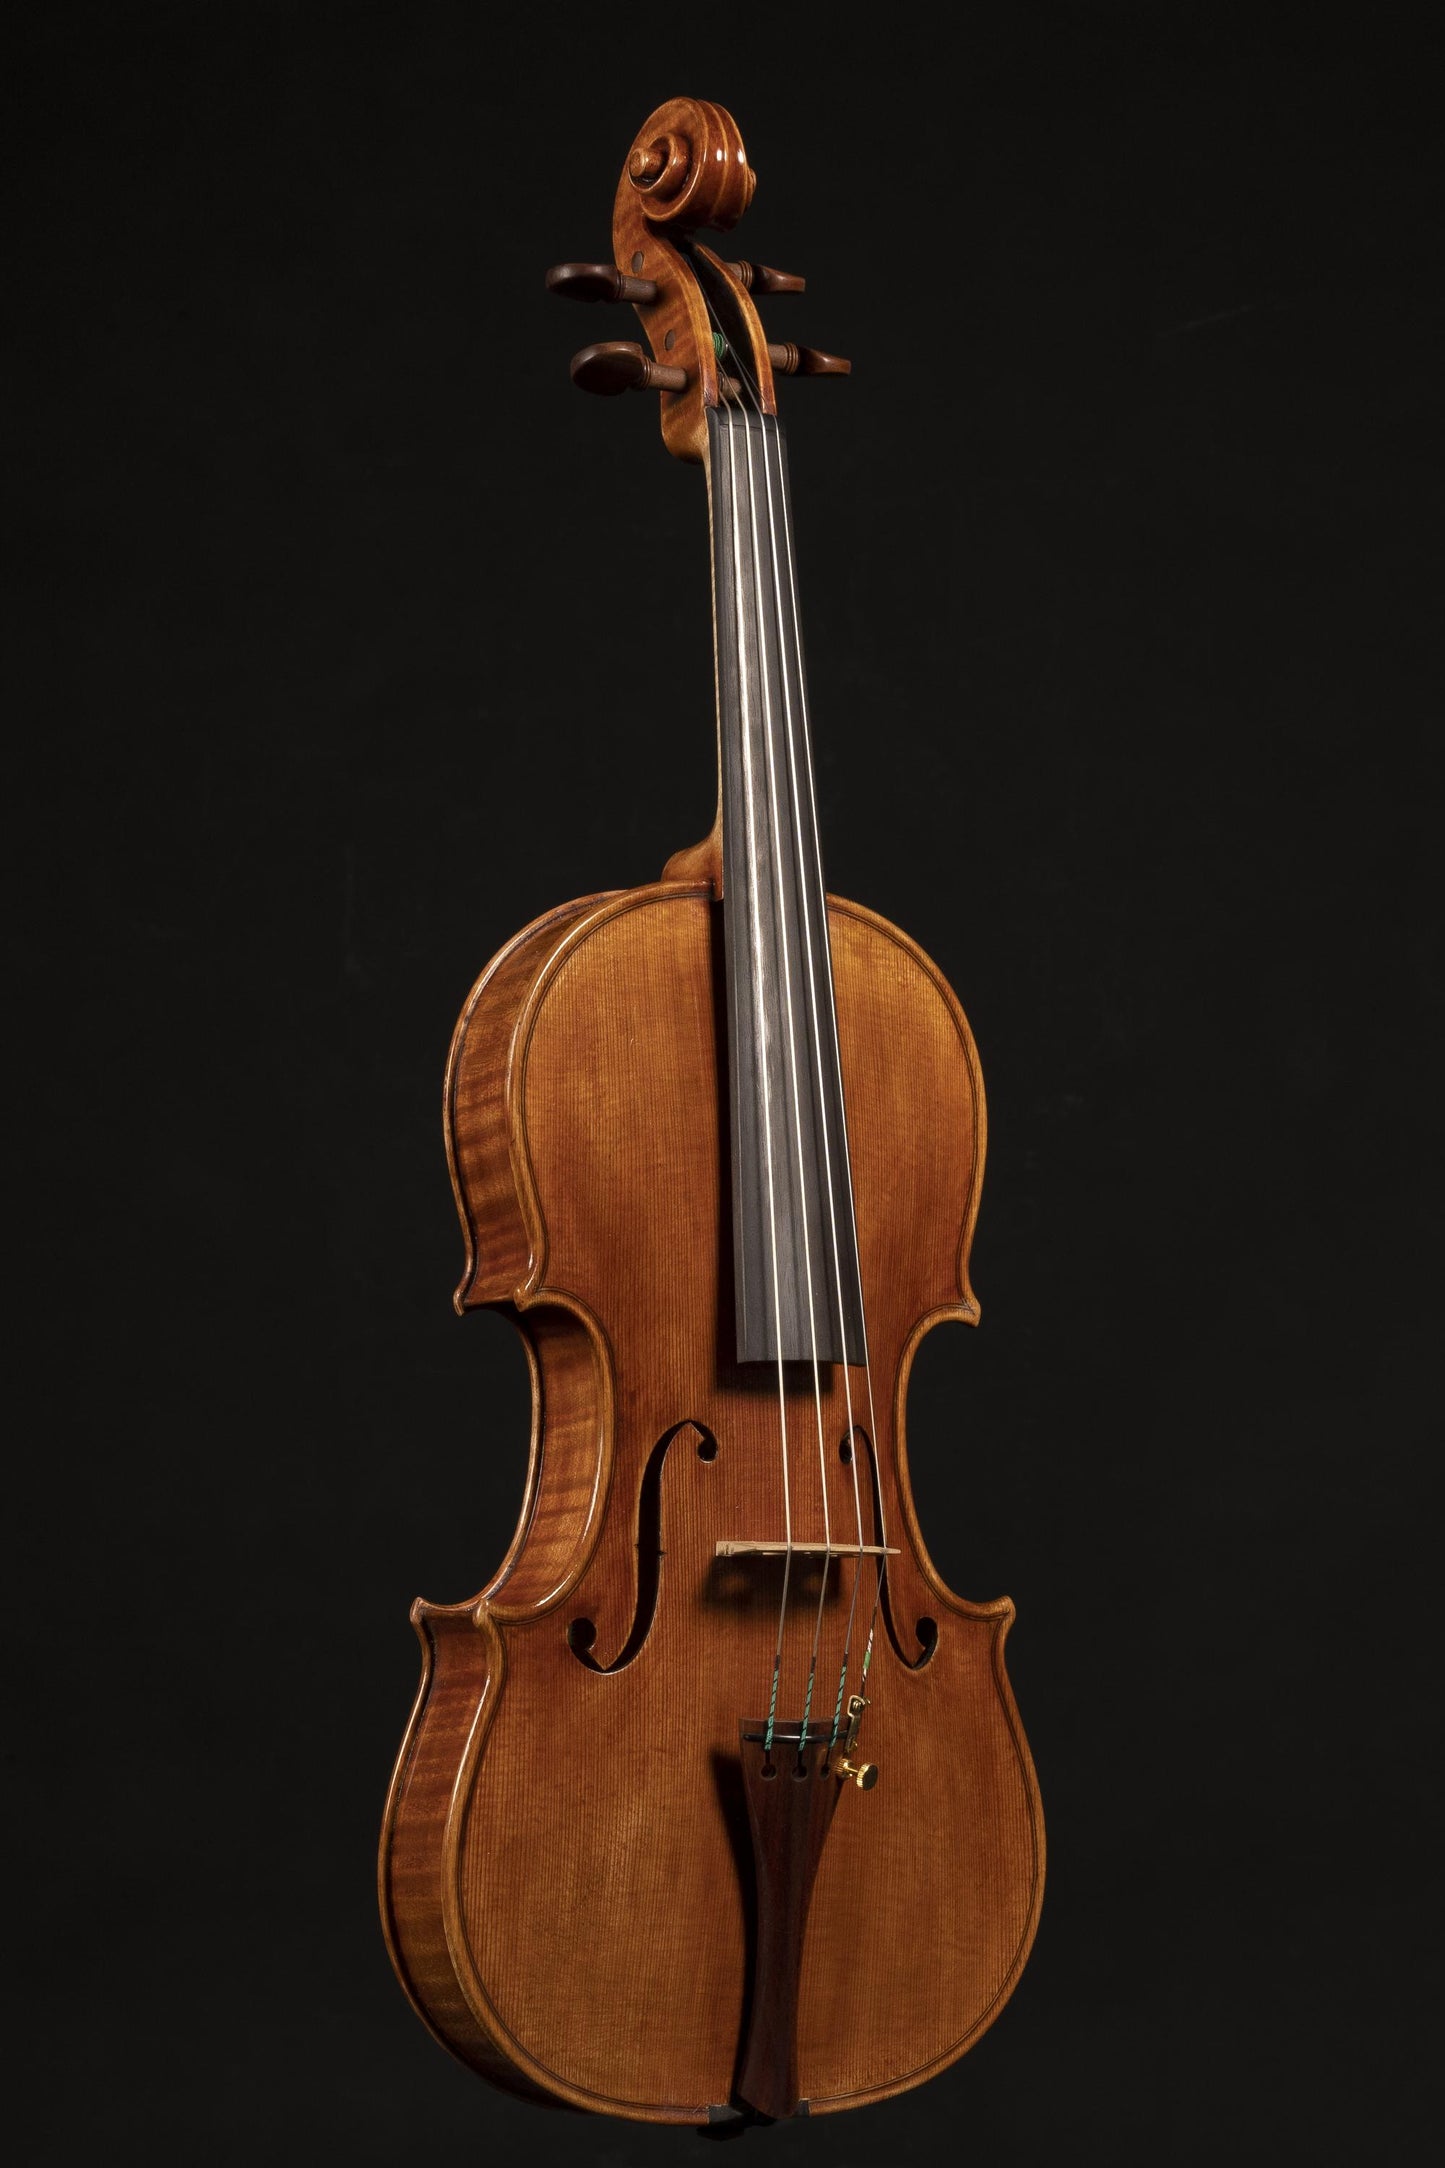 Vettori Dario Violin Mod A. Stradivari 1718 "Toscania" Passo Stalle" Italy 2021